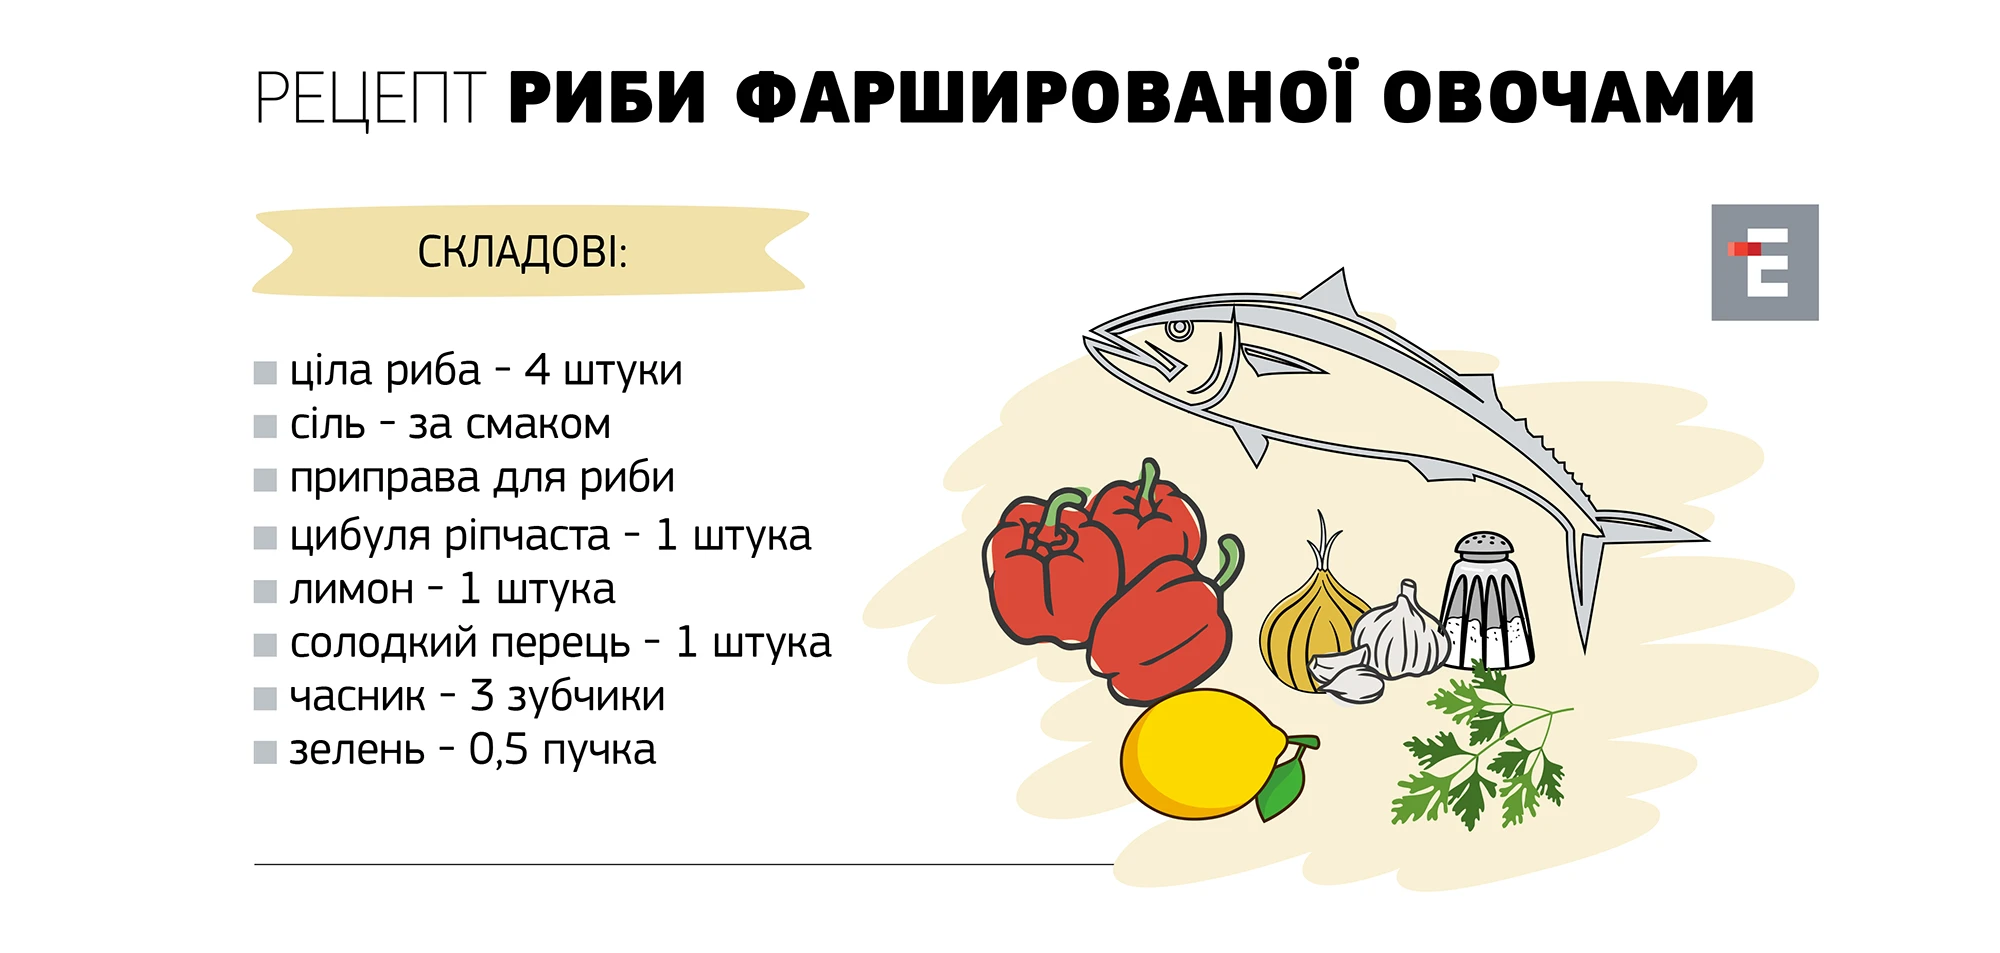 Риба, фарширована овочами, запечена в духовці